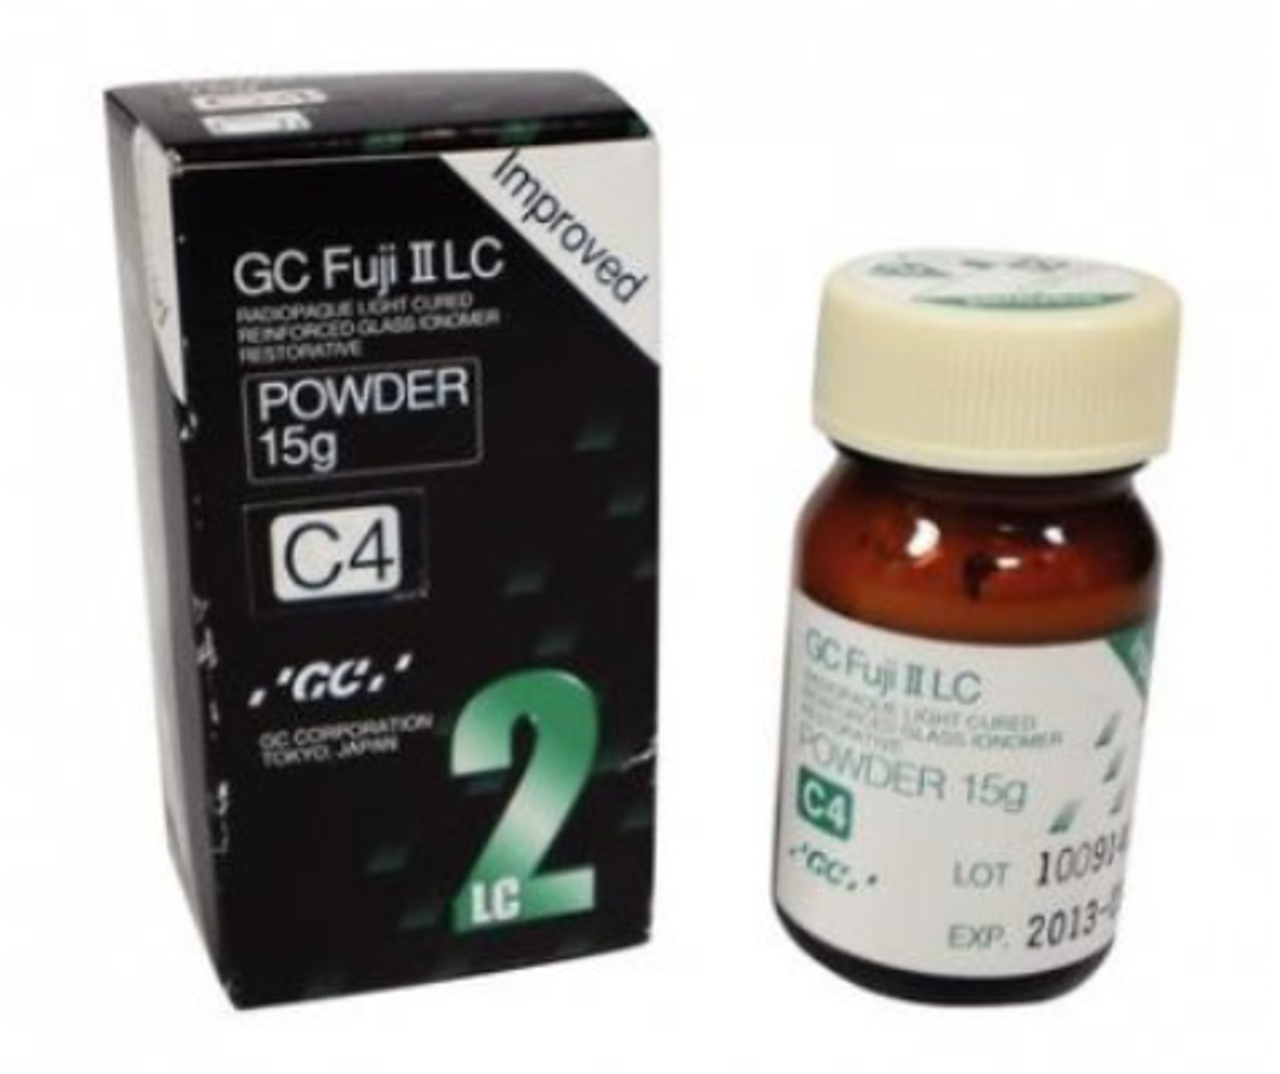 GC Fuji II LC Ionomer Powder Refill C4 15g